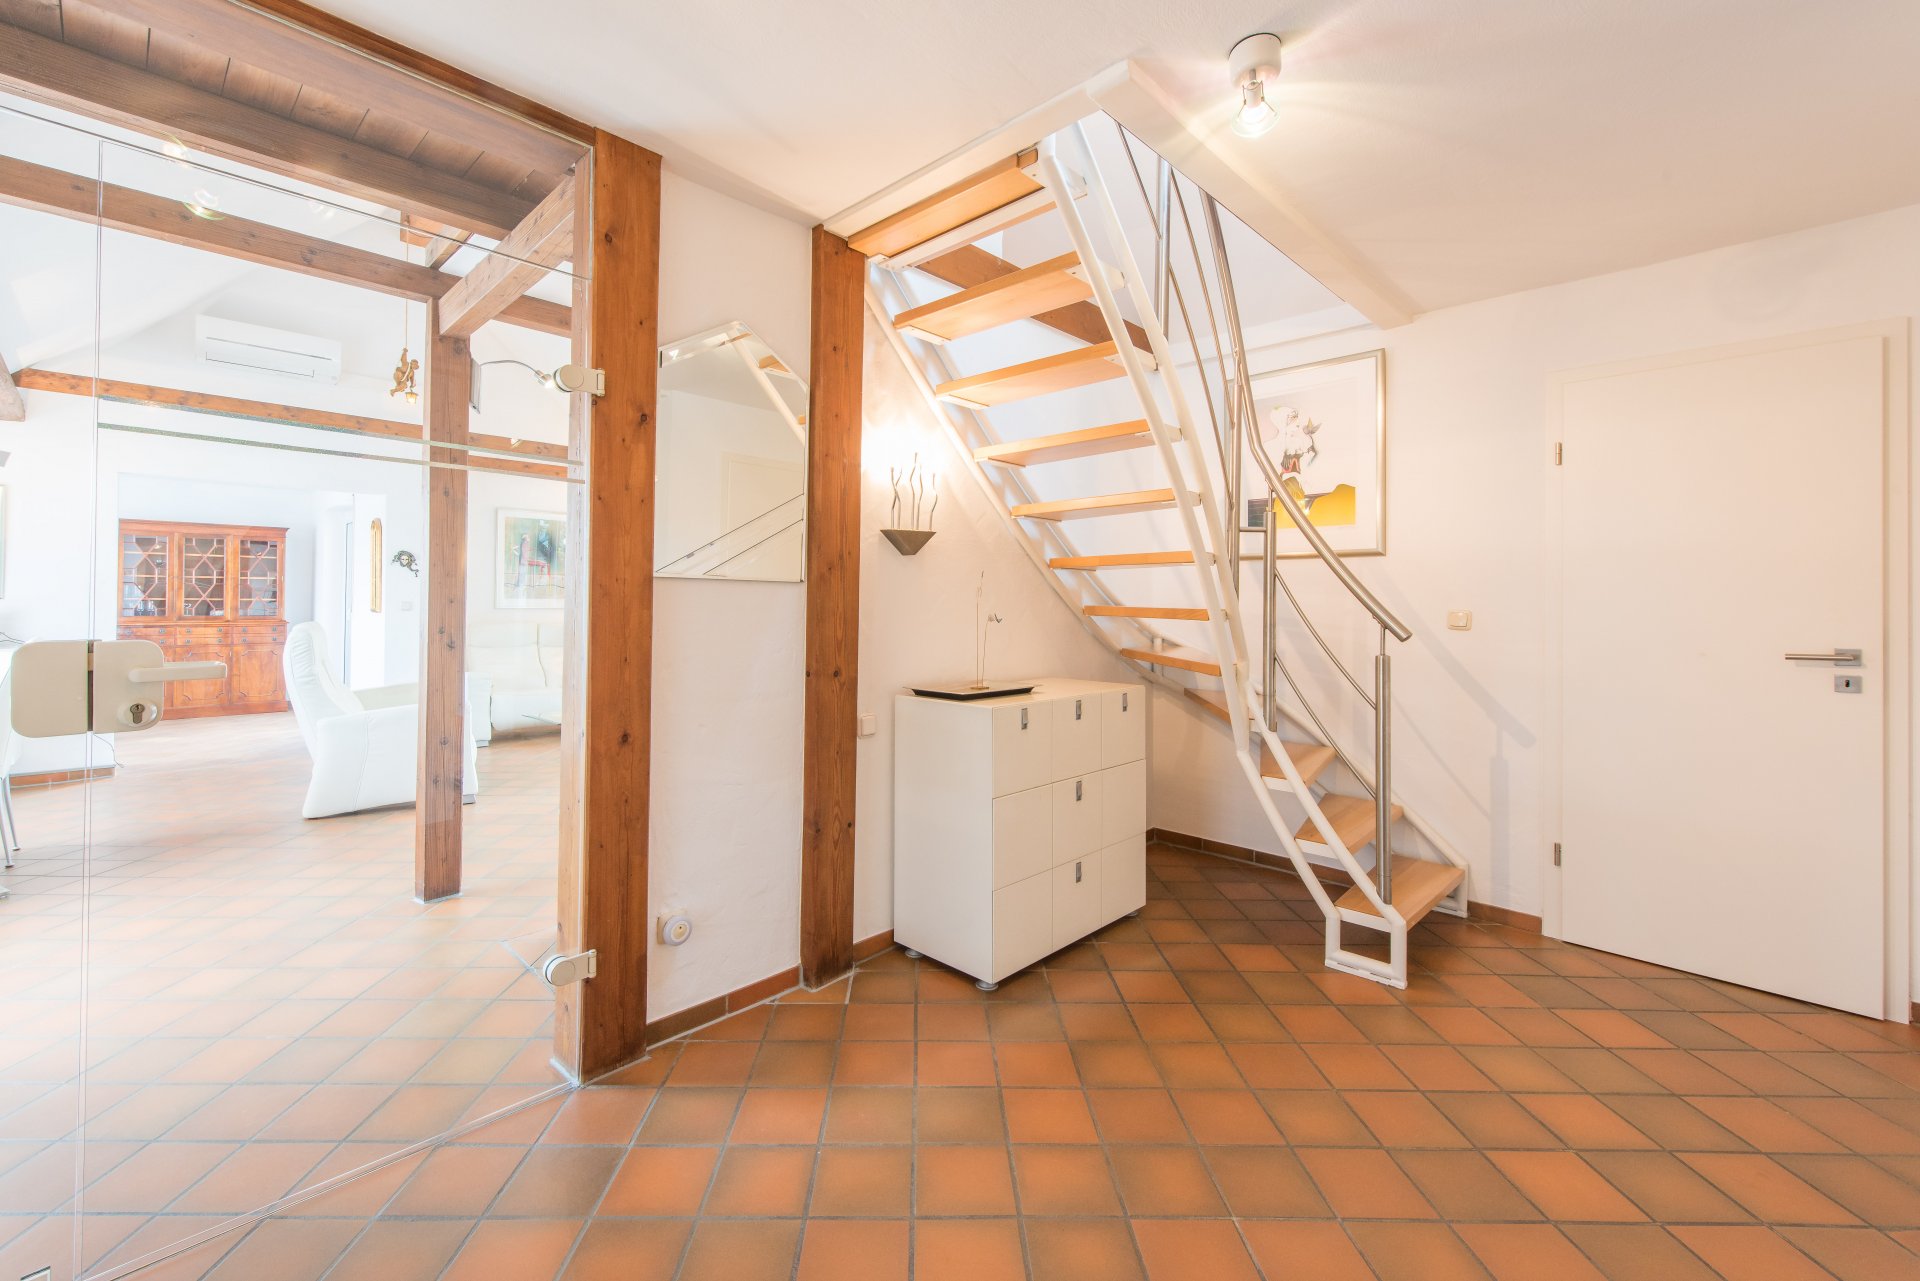 Leichte Holz Stahltreppe zum oberen Geschoss - Oliver Reifferscheid - Immobilienmakler Darmstadt